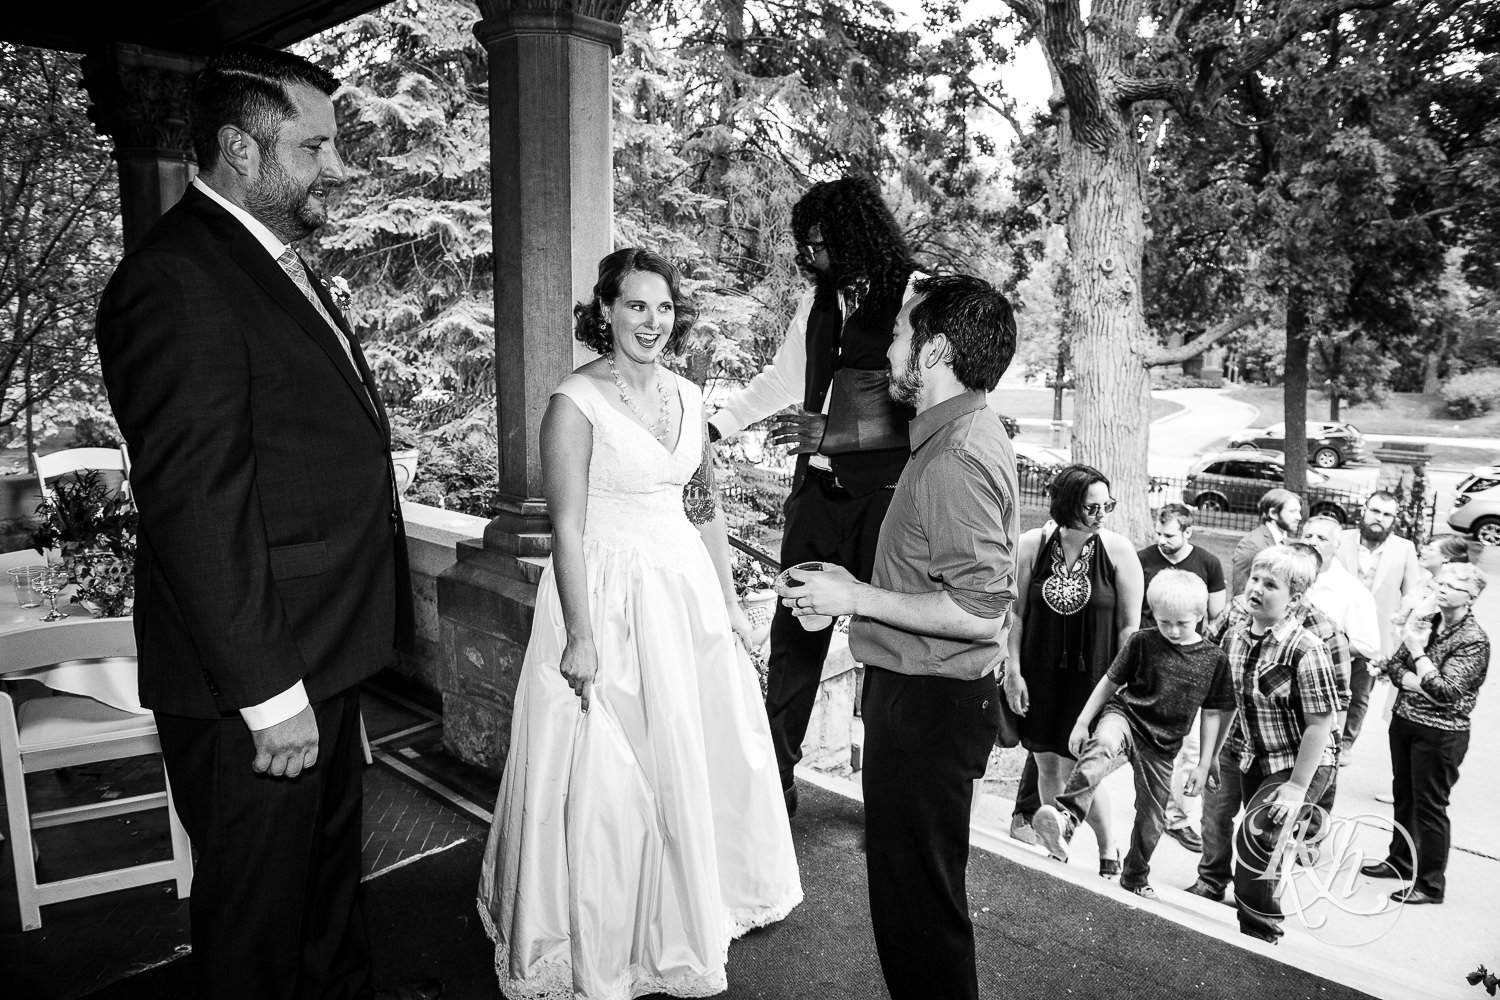 Guest hugs bride during wedding reception at Summit Manor wedding in Saint Paul, Minnesota.